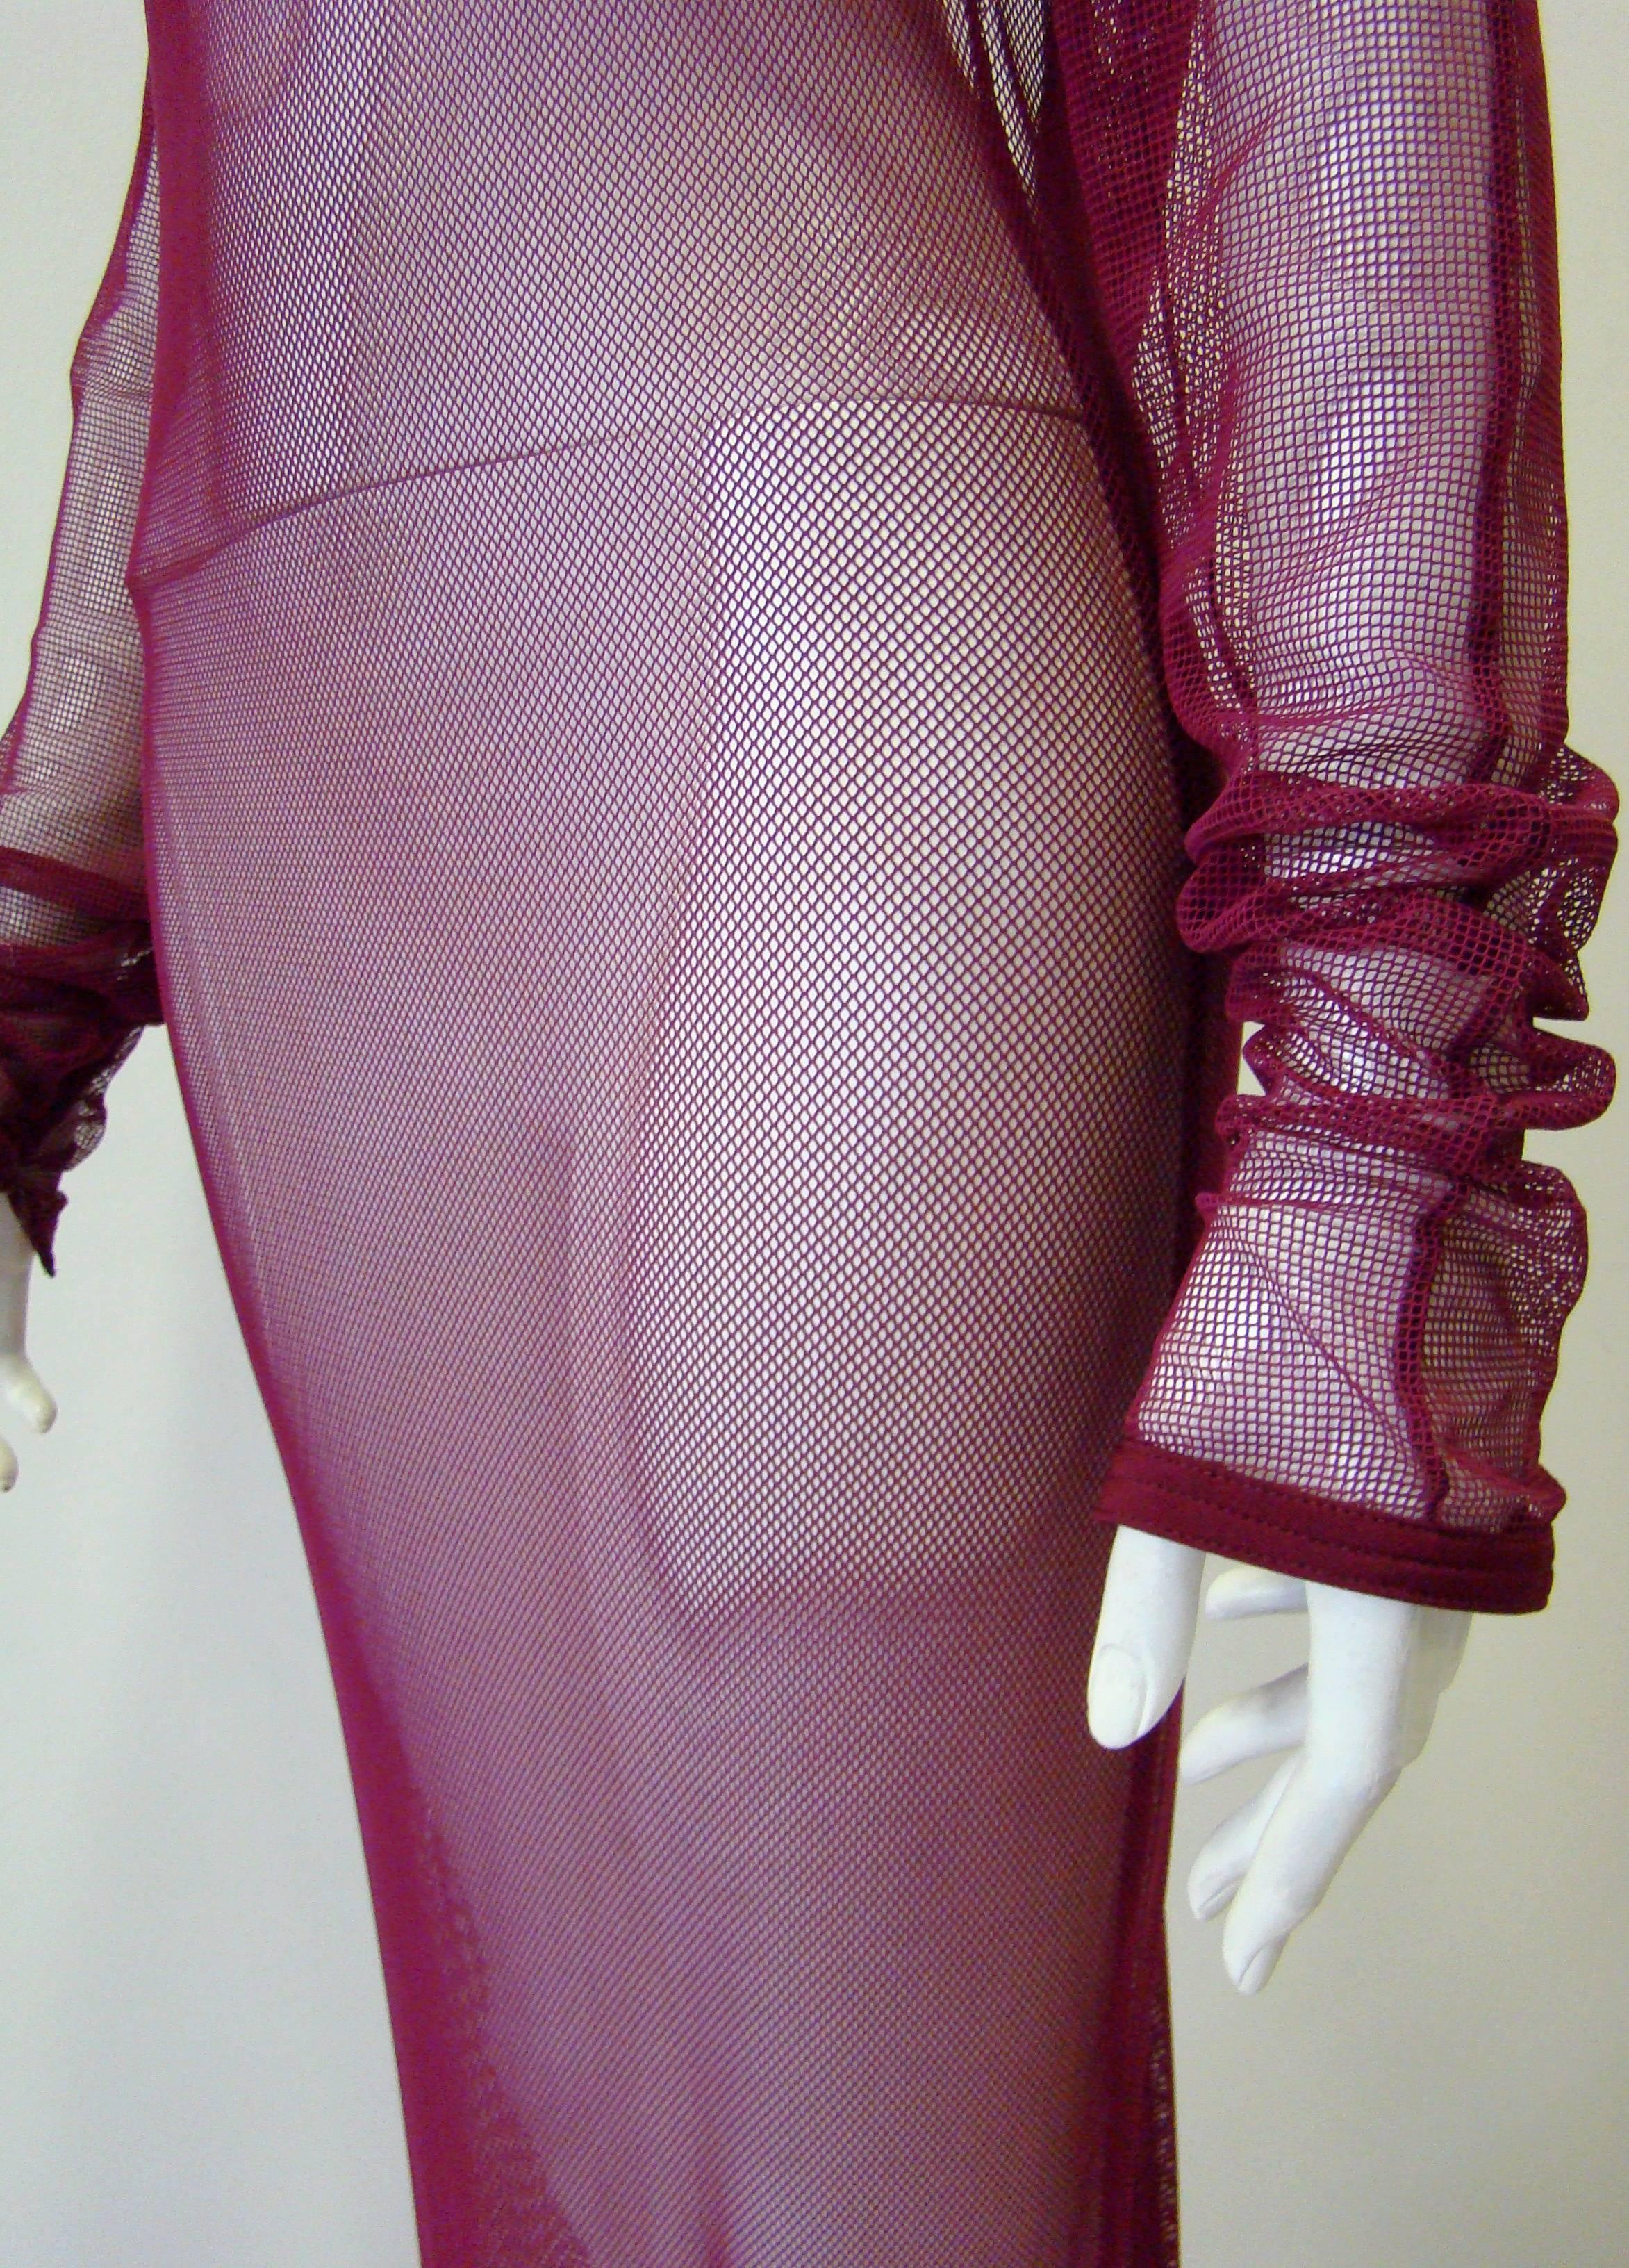 Unique Gianni Versace Net Magenta Dress Fall 1993-1994 For Sale 1